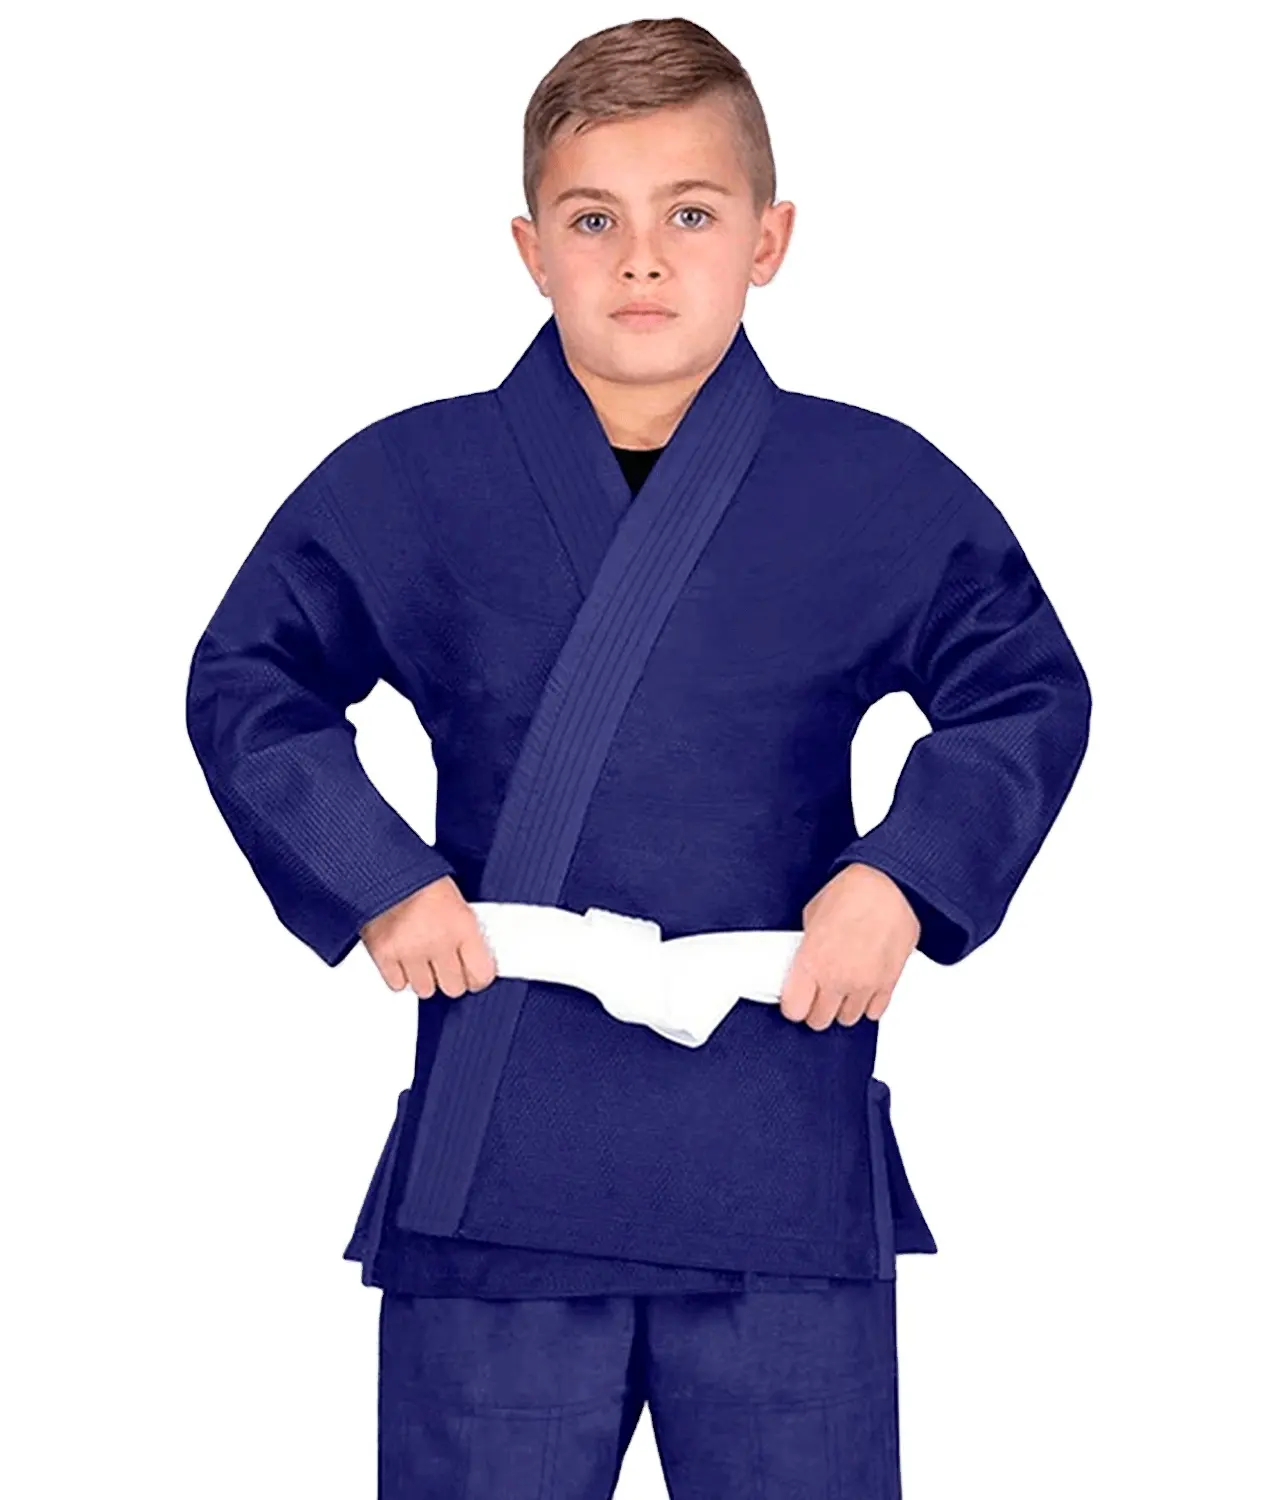 Martial Arts Aikido Judo Student Karate Suit Uniform Costume With Belt